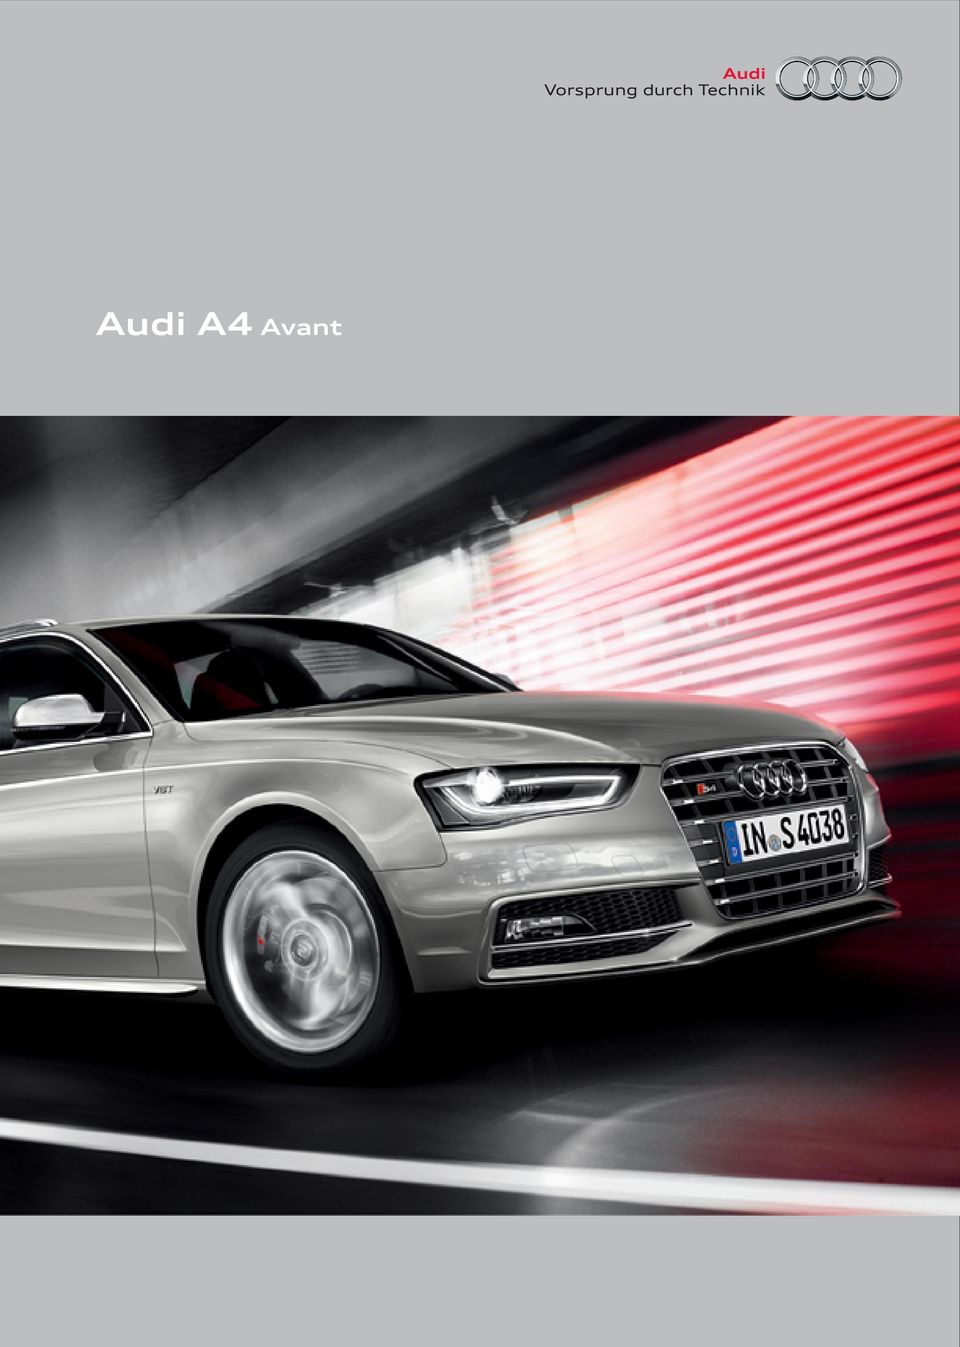 de wind is sterk Minder Pijlpunt Audi A4 Avant - Prijslijst - PDF Free Download